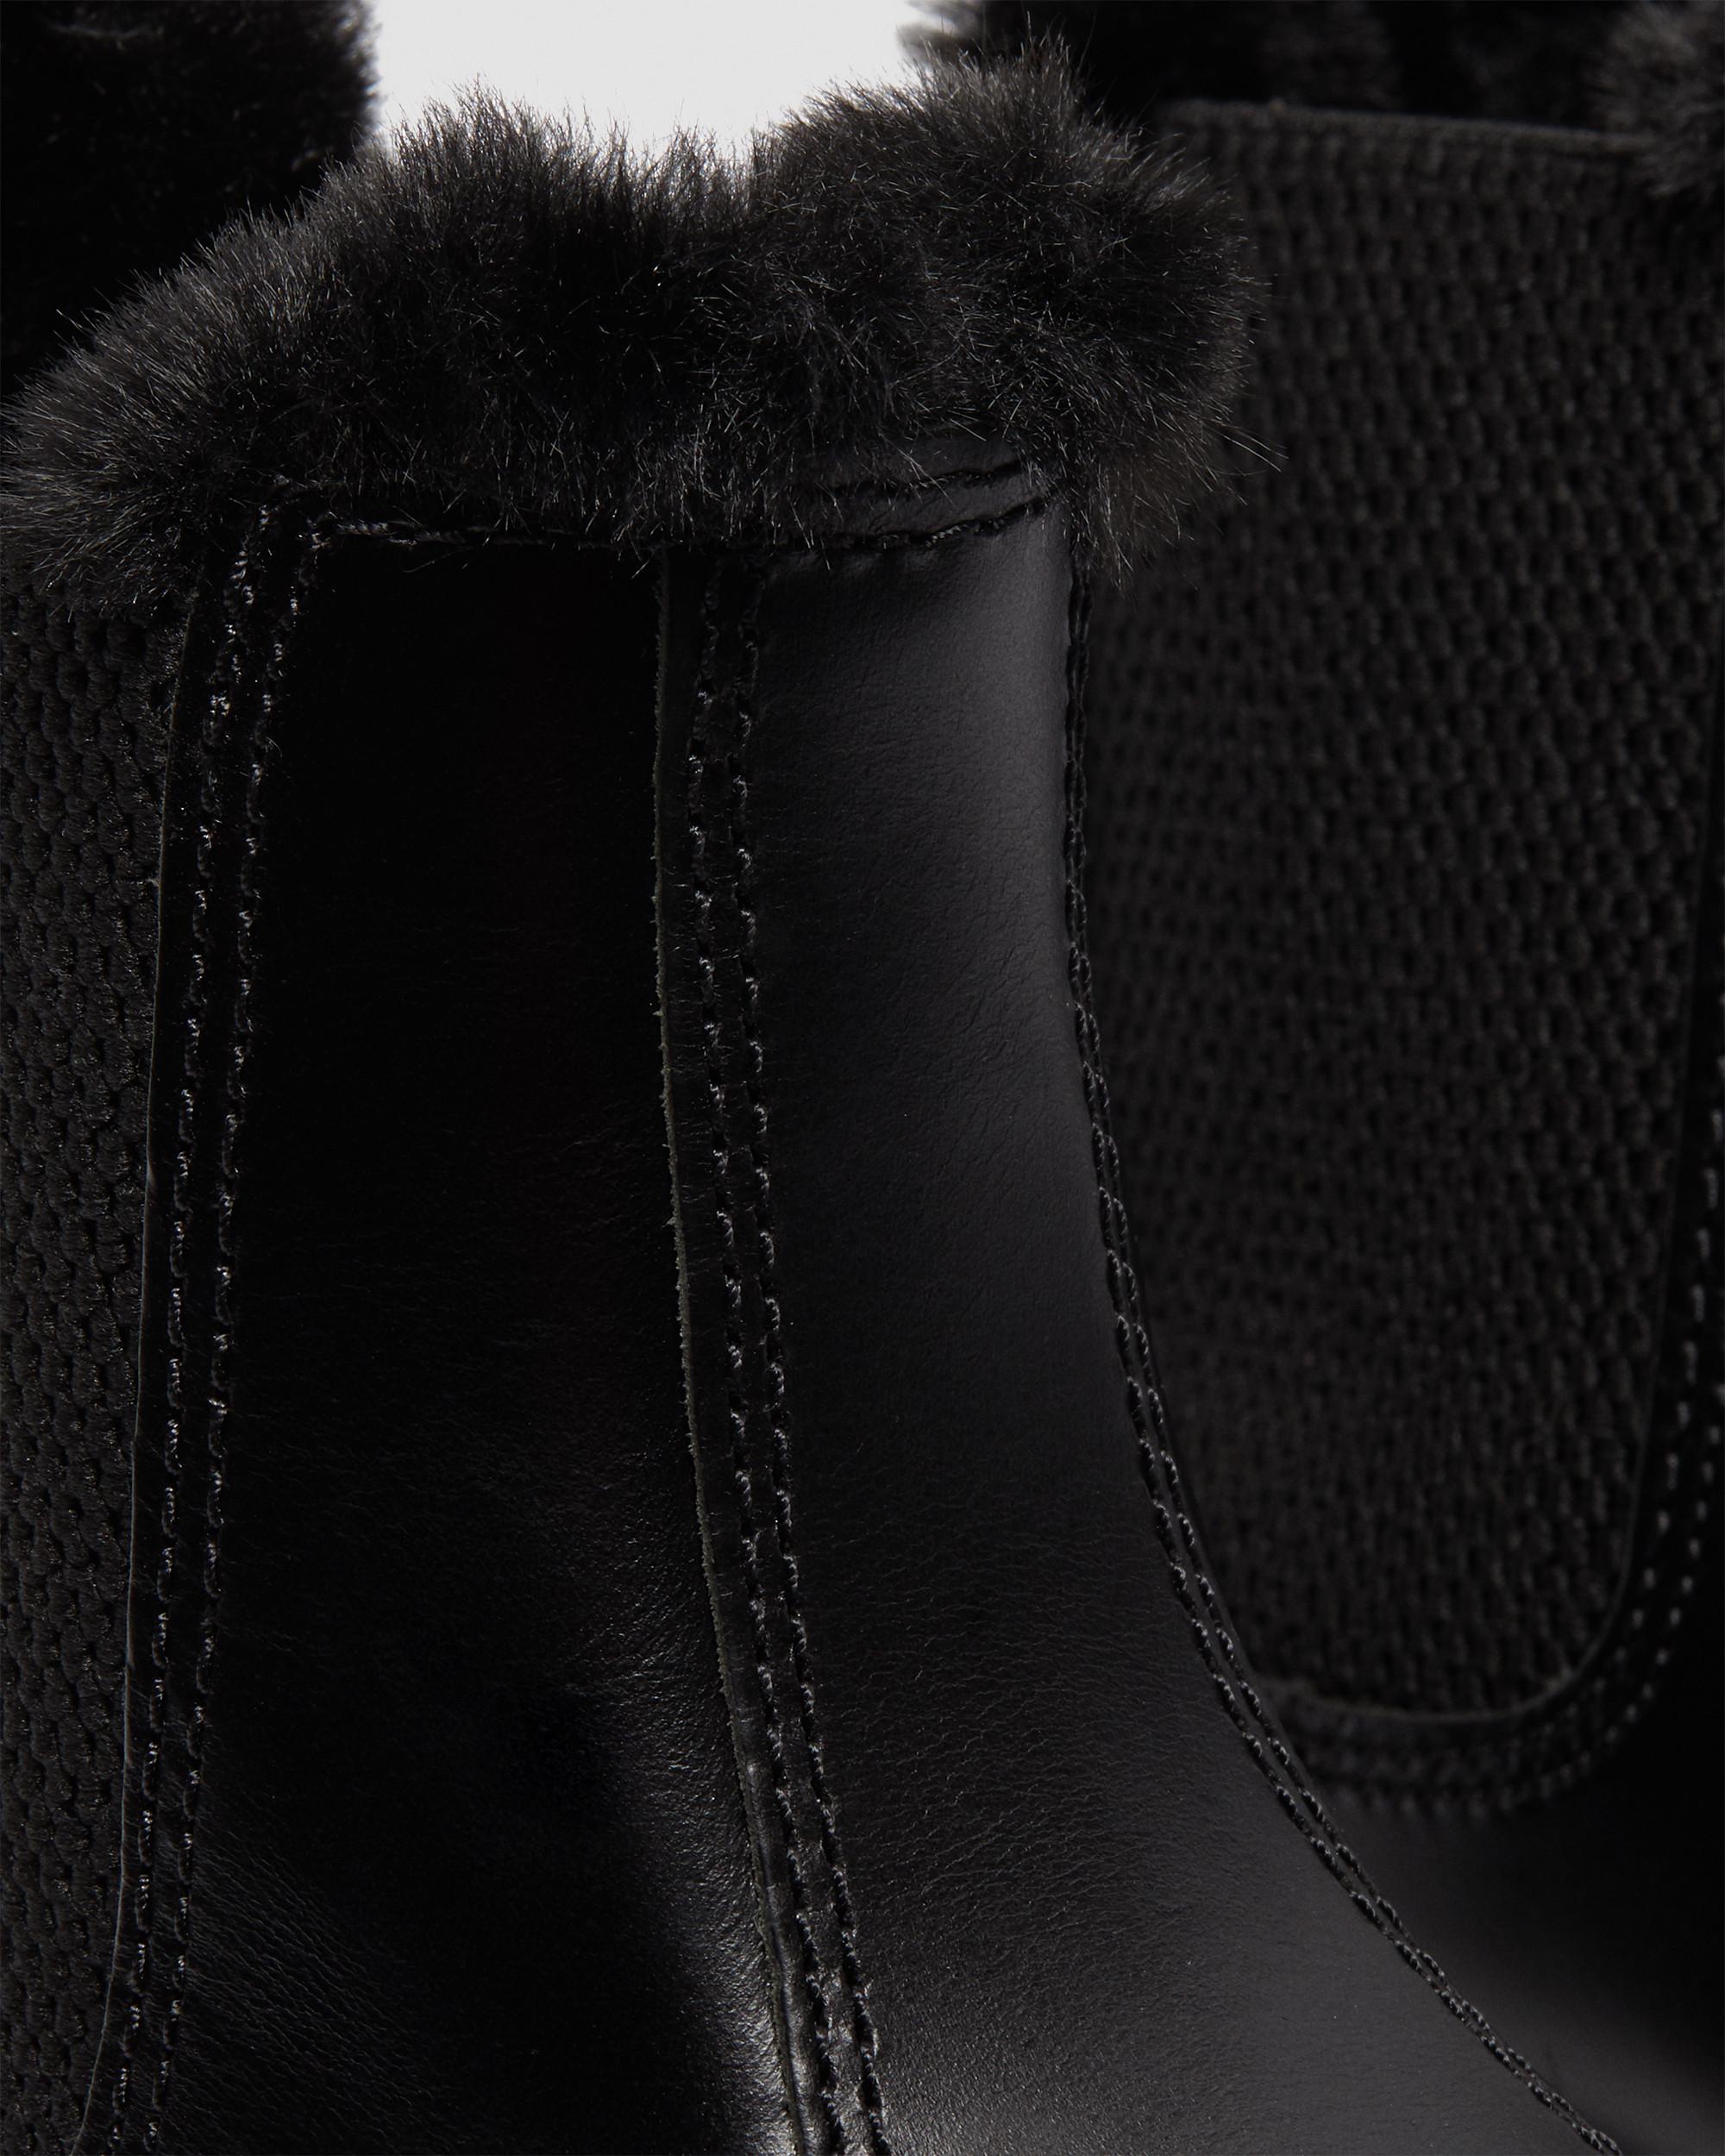 Arkitektur sirene Ledig 2976 Leonore Faux Fur Lined Chelsea Boots | Dr. Martens